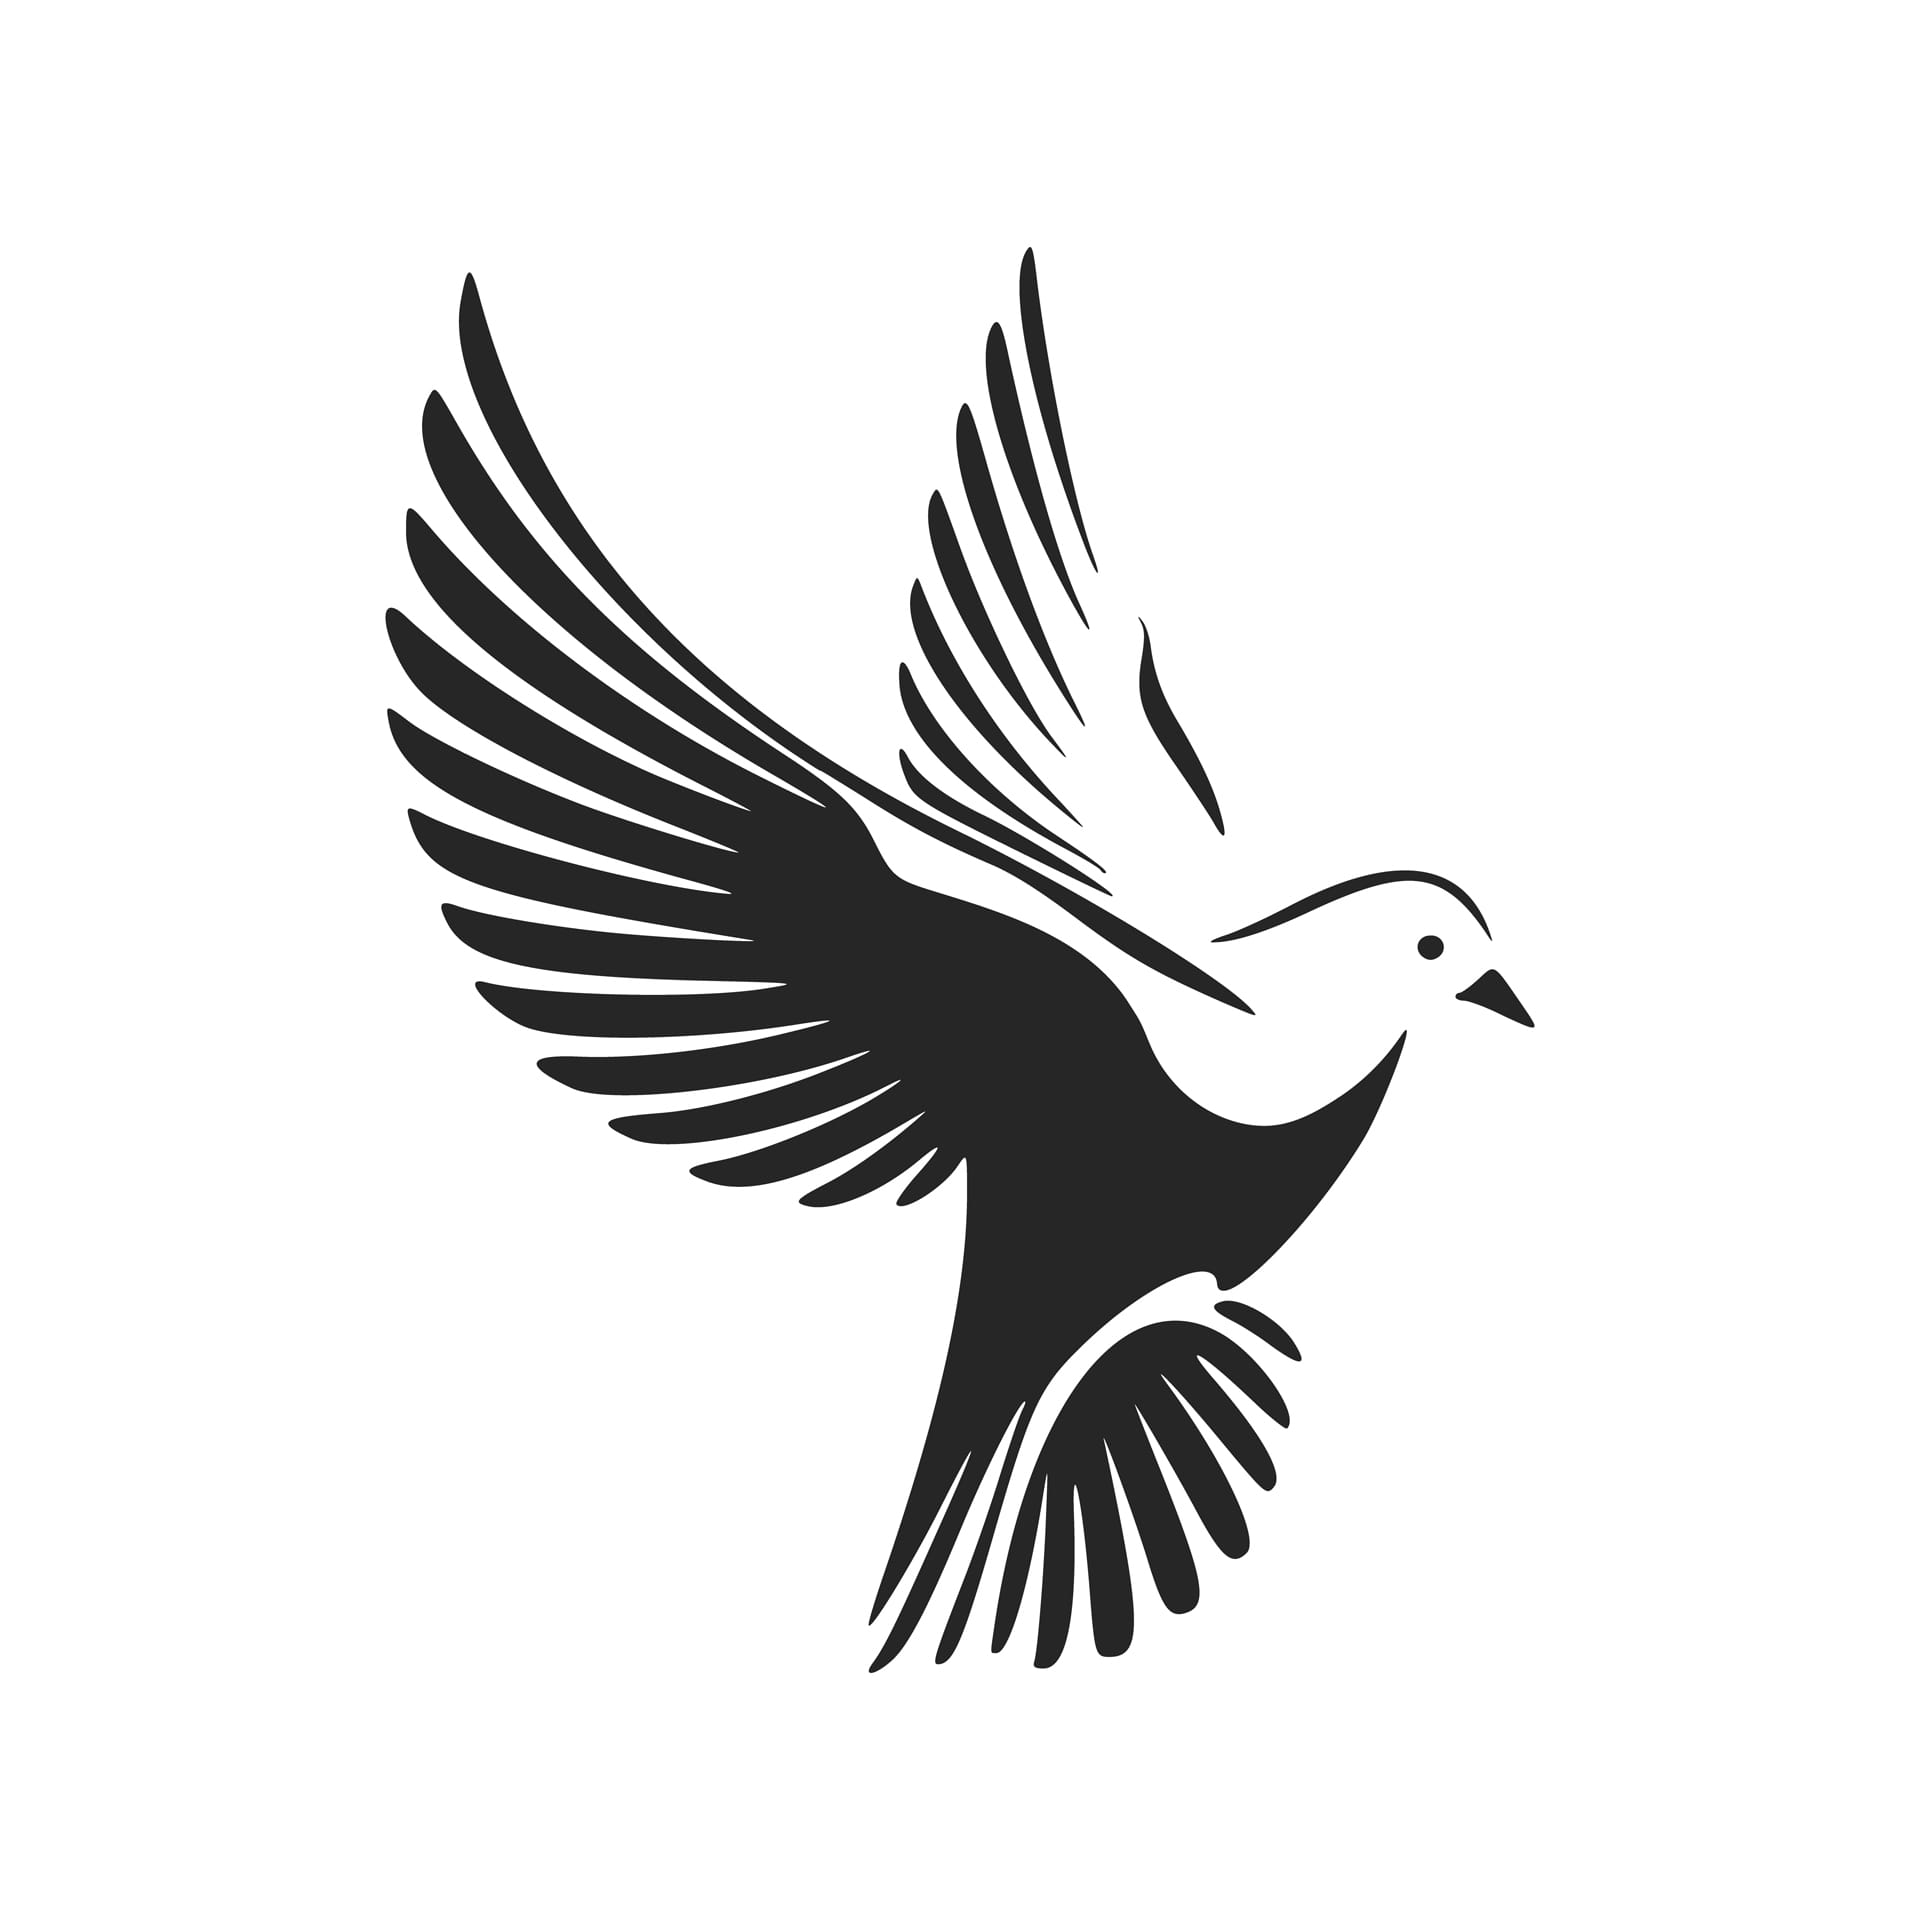 Elegant black white dove logo perfect any company looking stylish